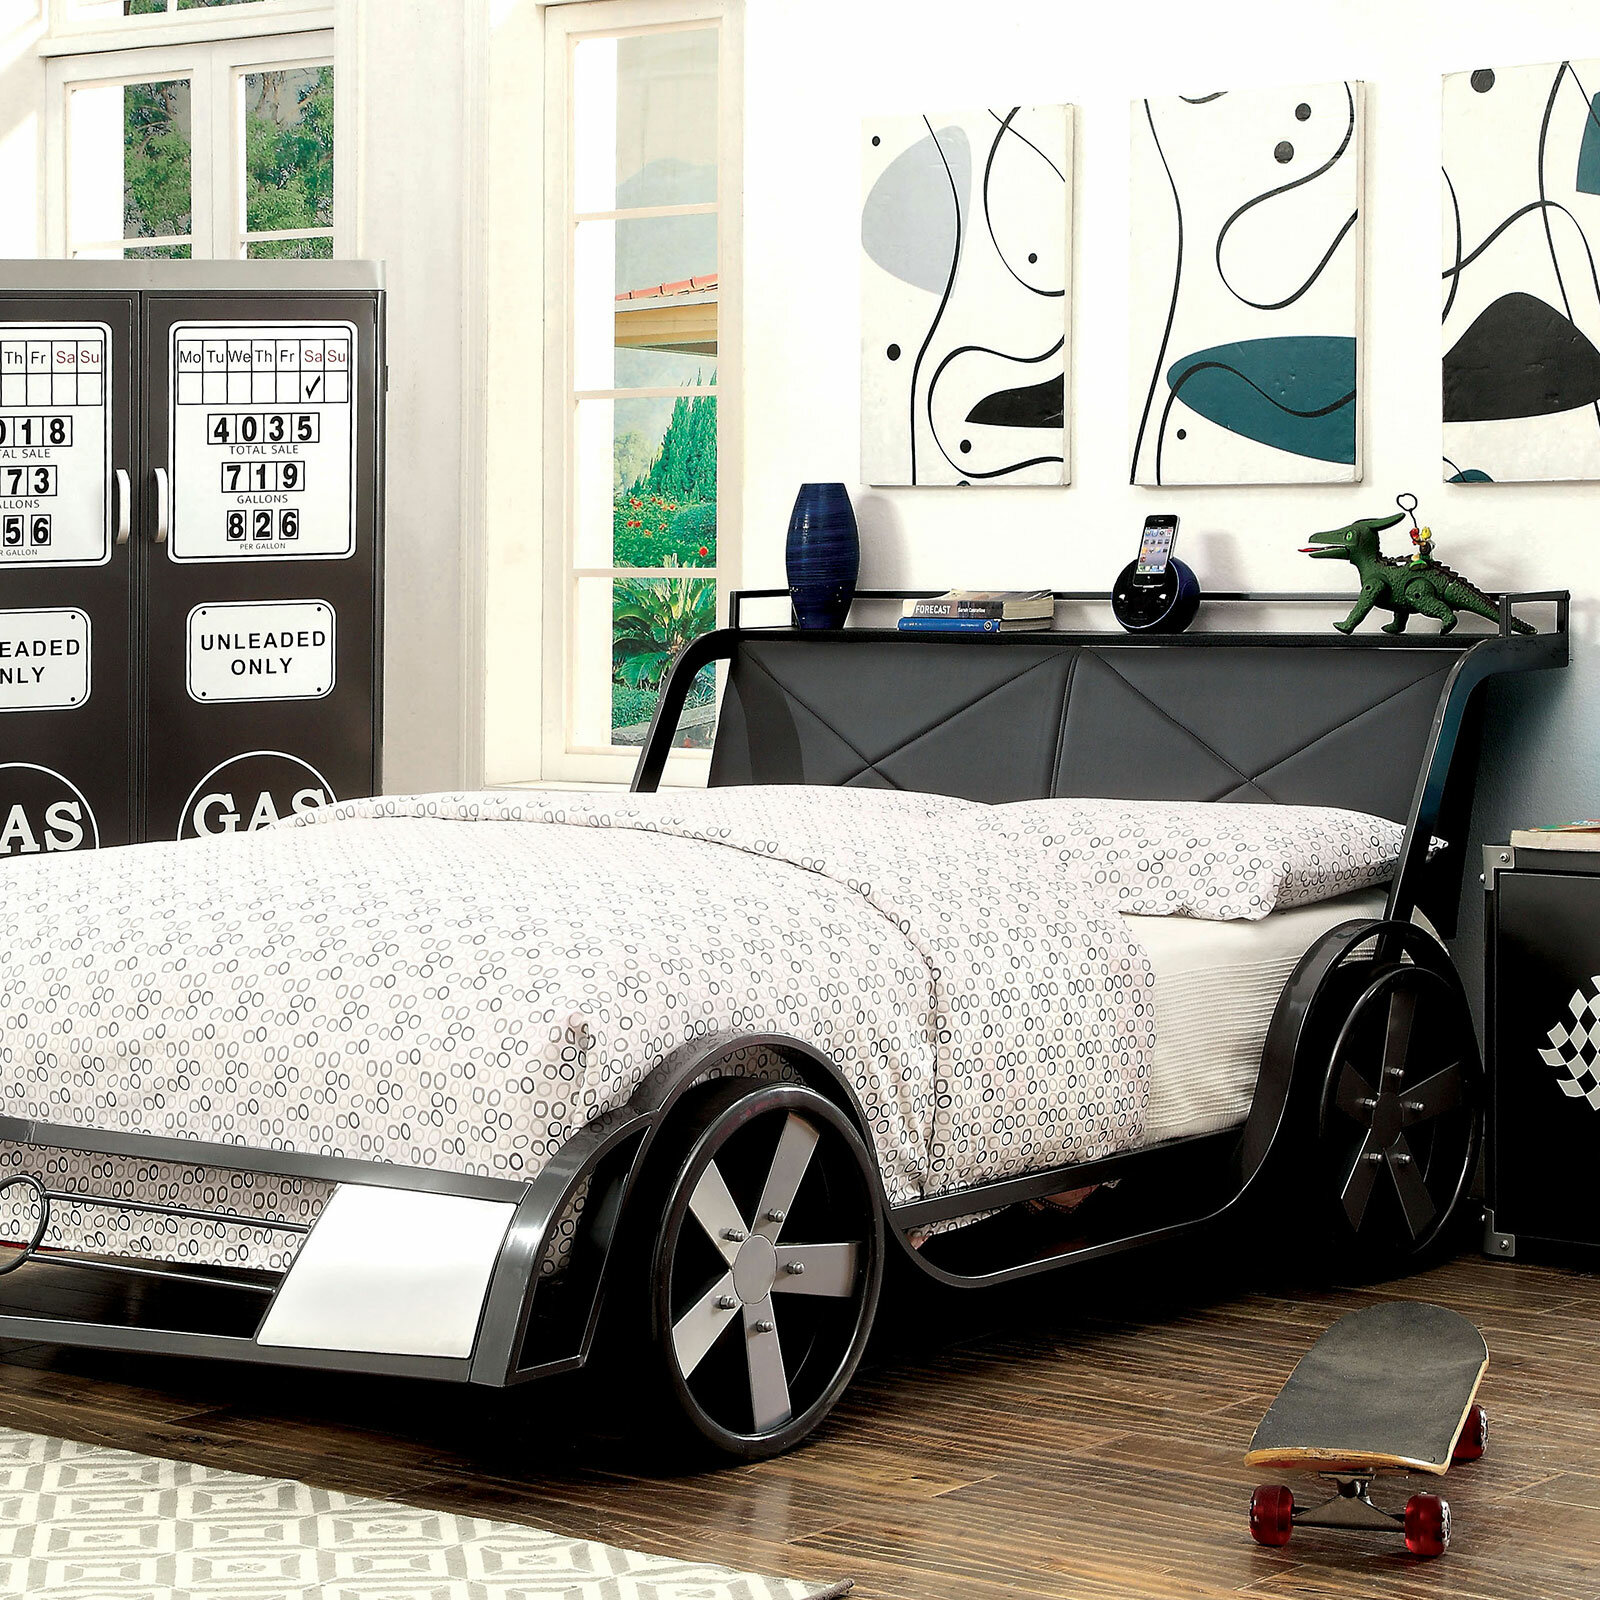 children's car themed bedroom furniture